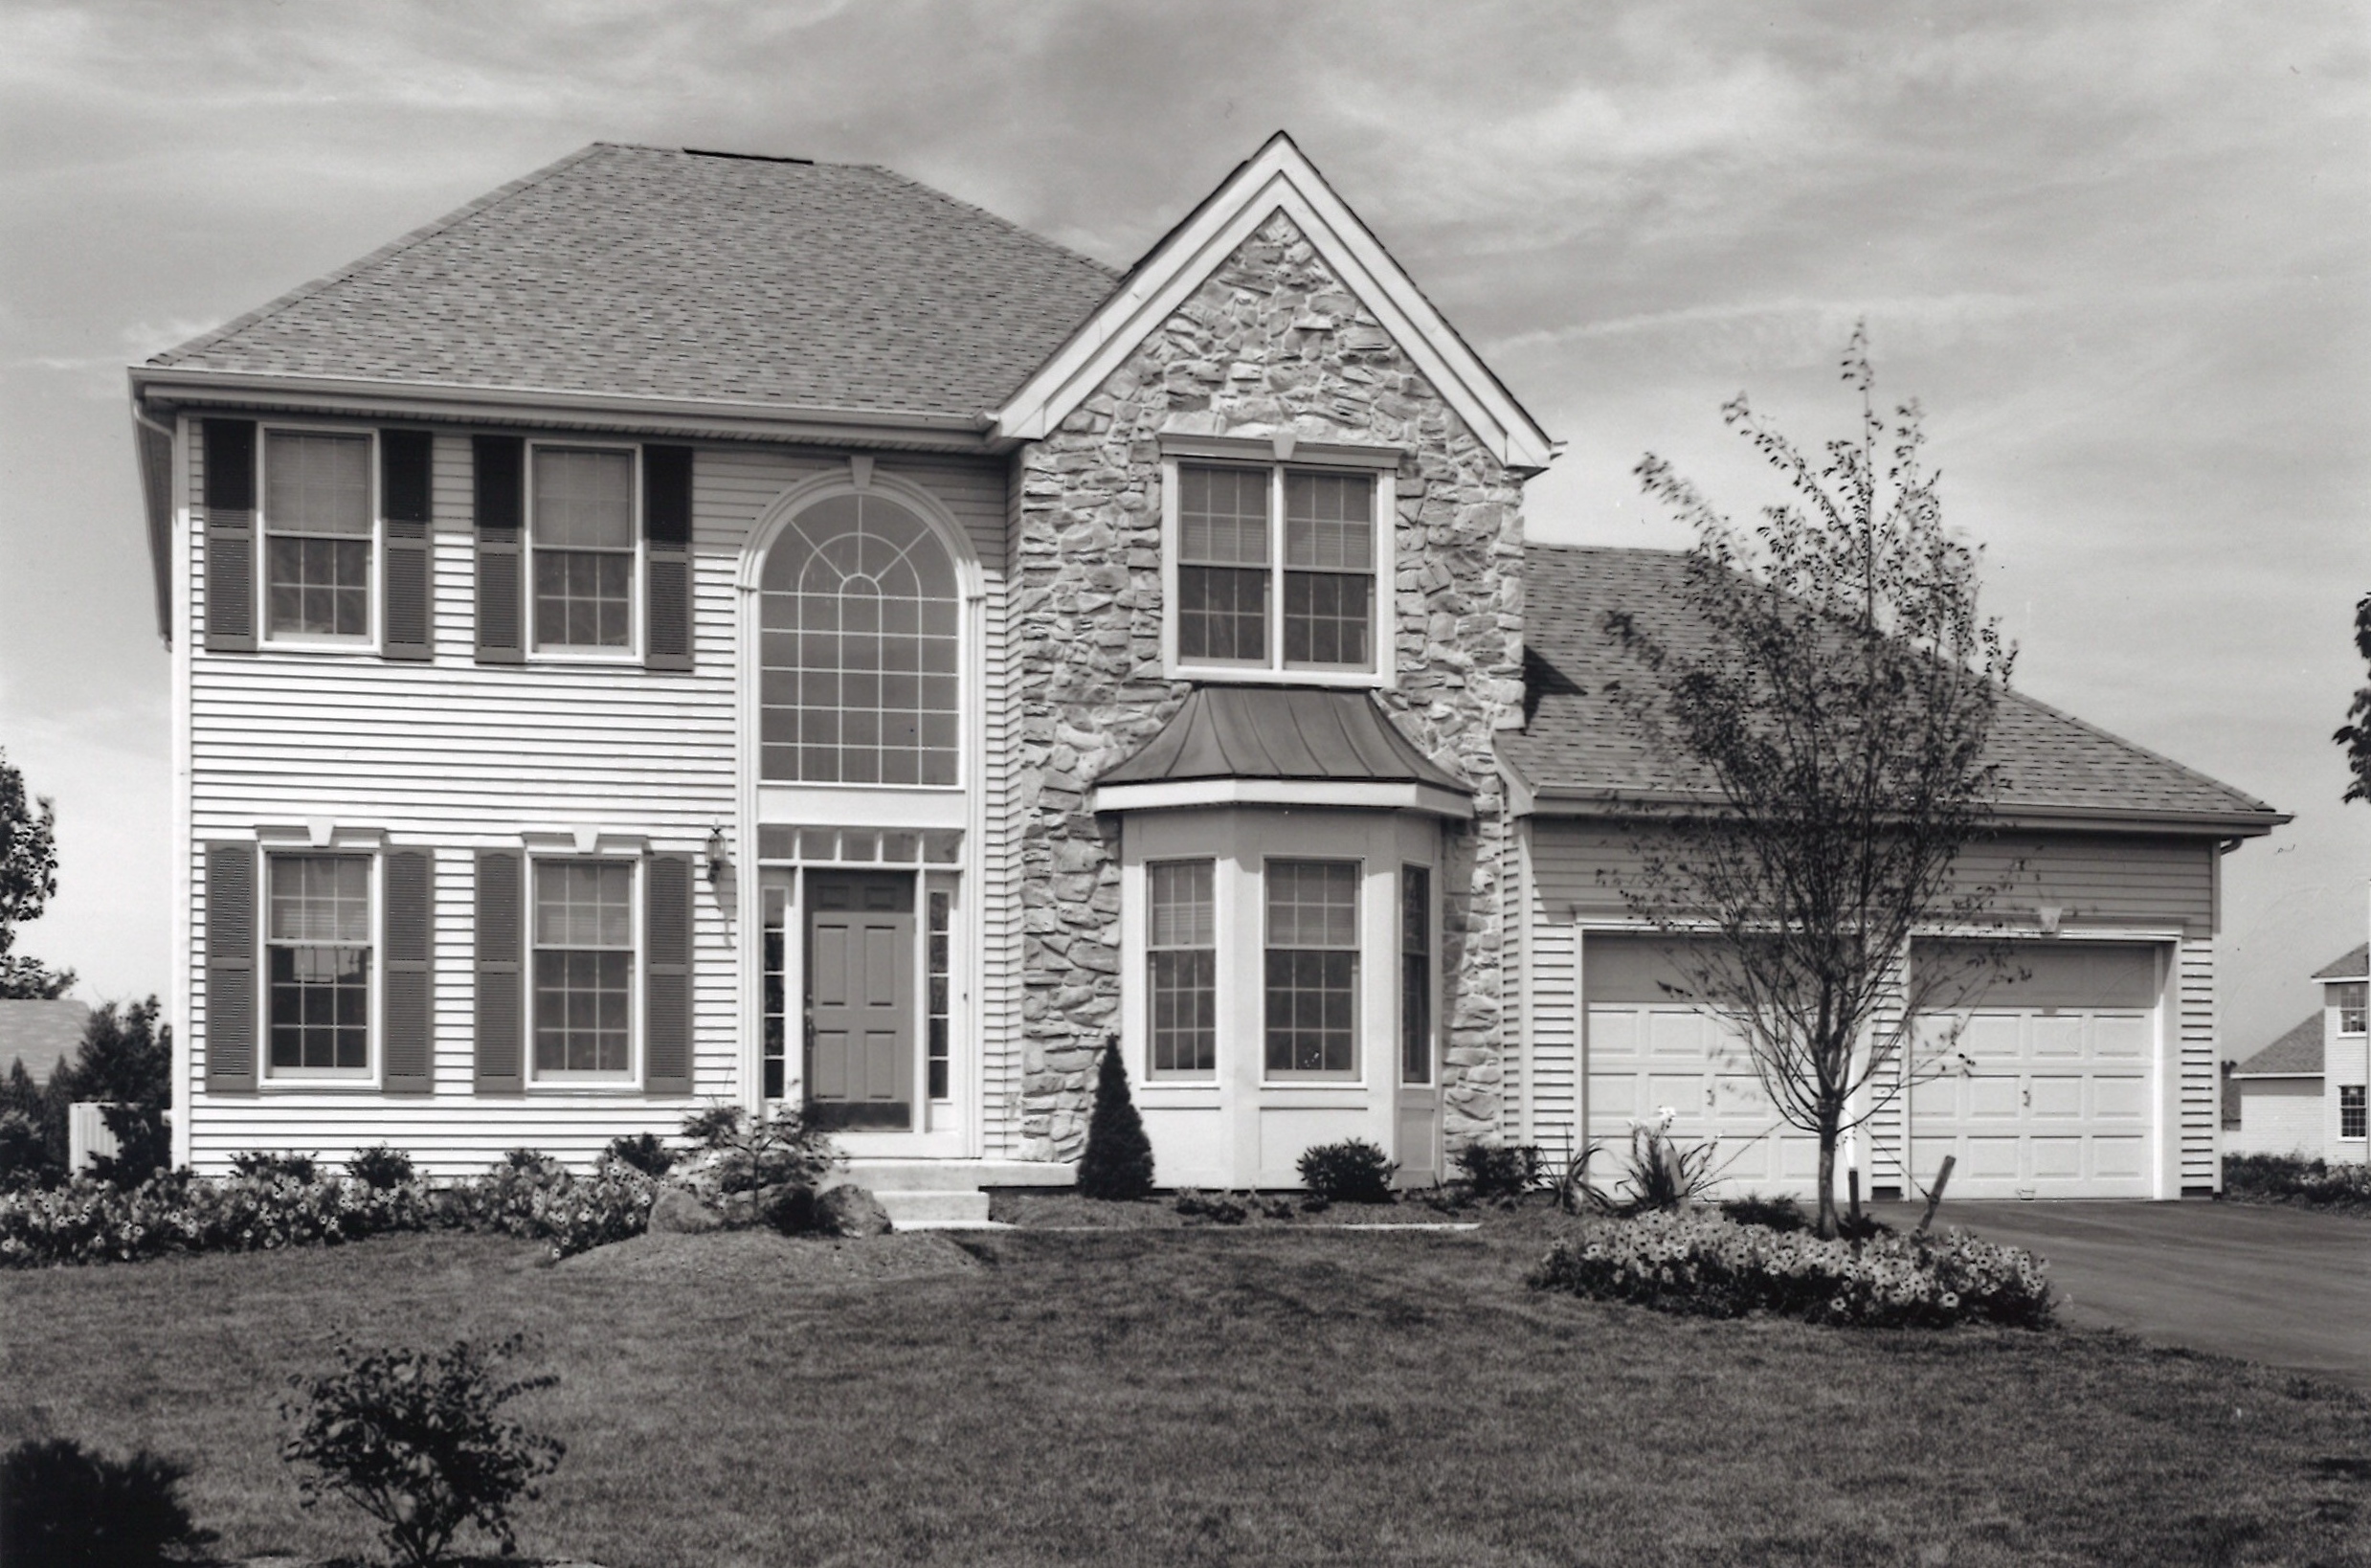 Single family homes in Plainsboro, NJ | Sharbell Development Corp.